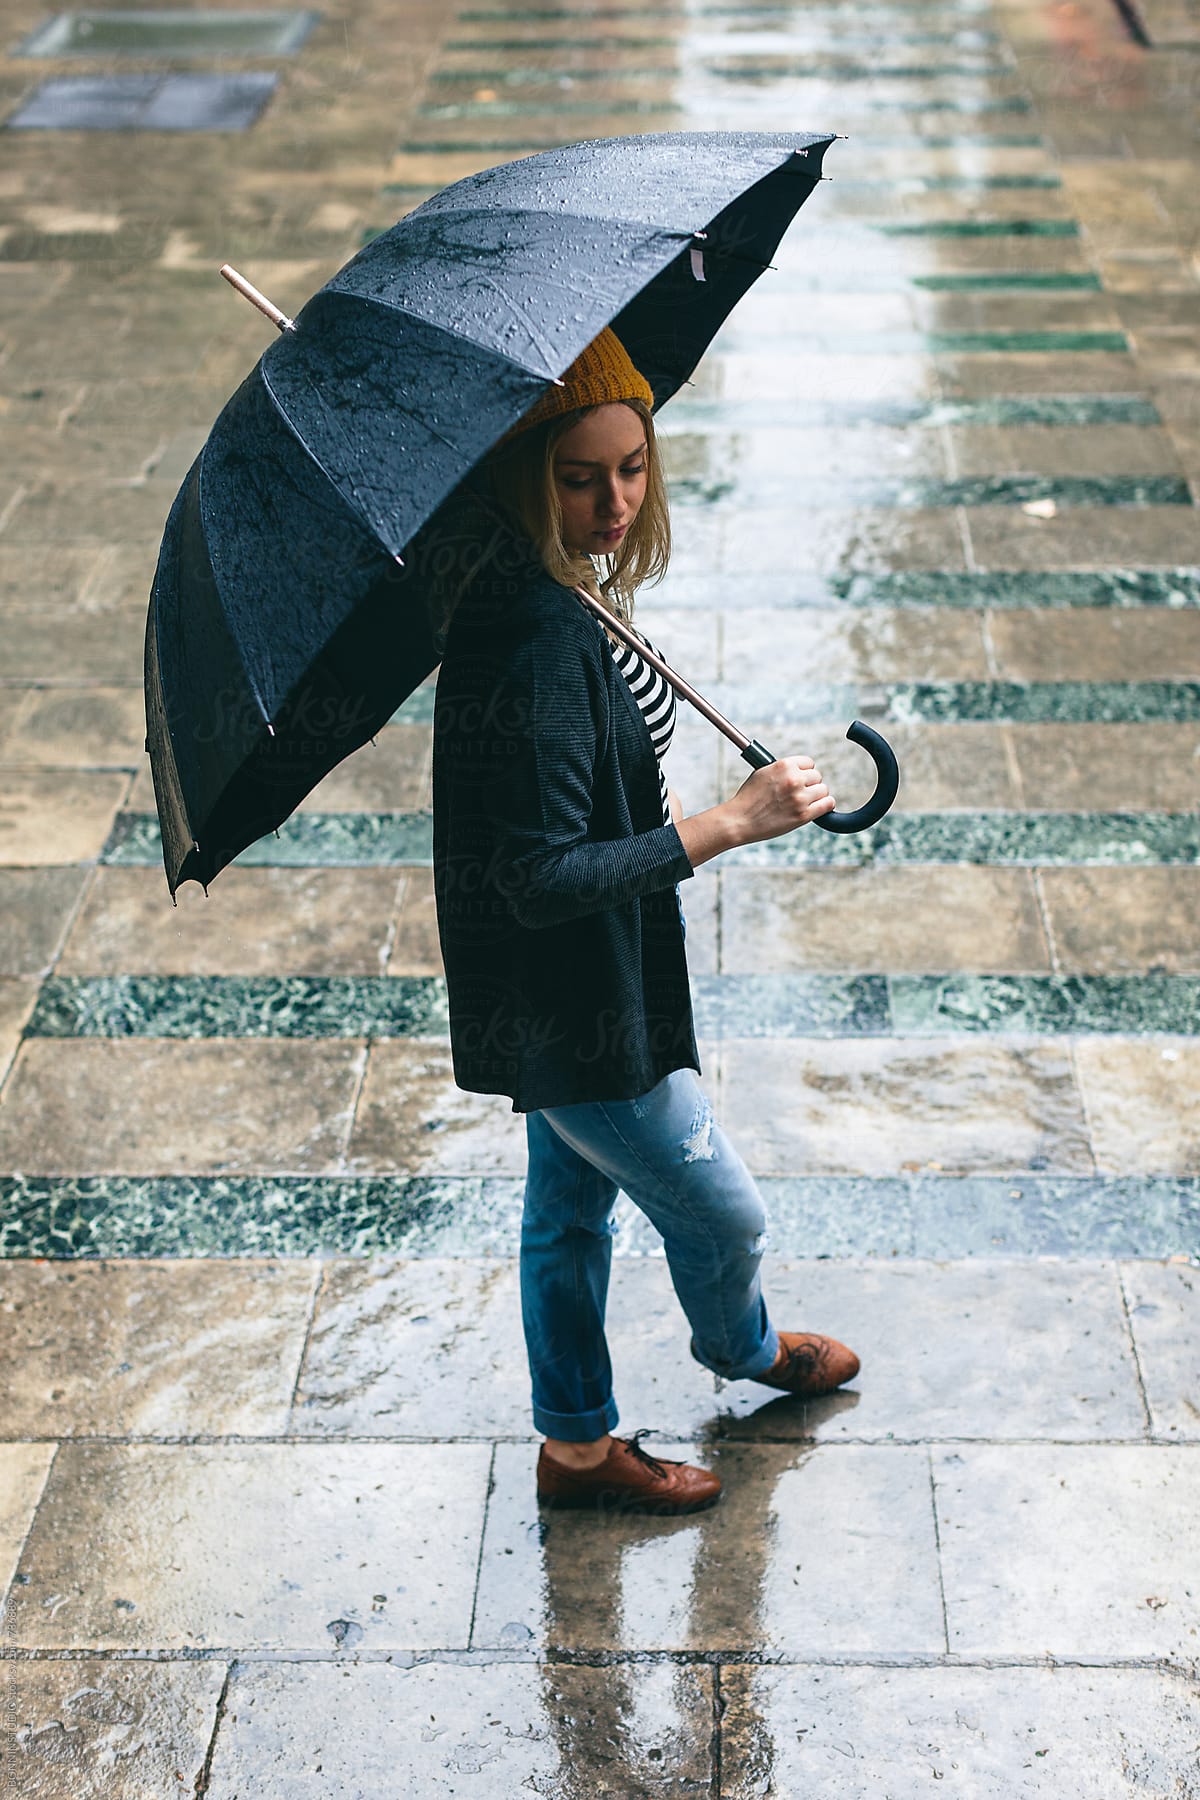 girl with umbrella in rain